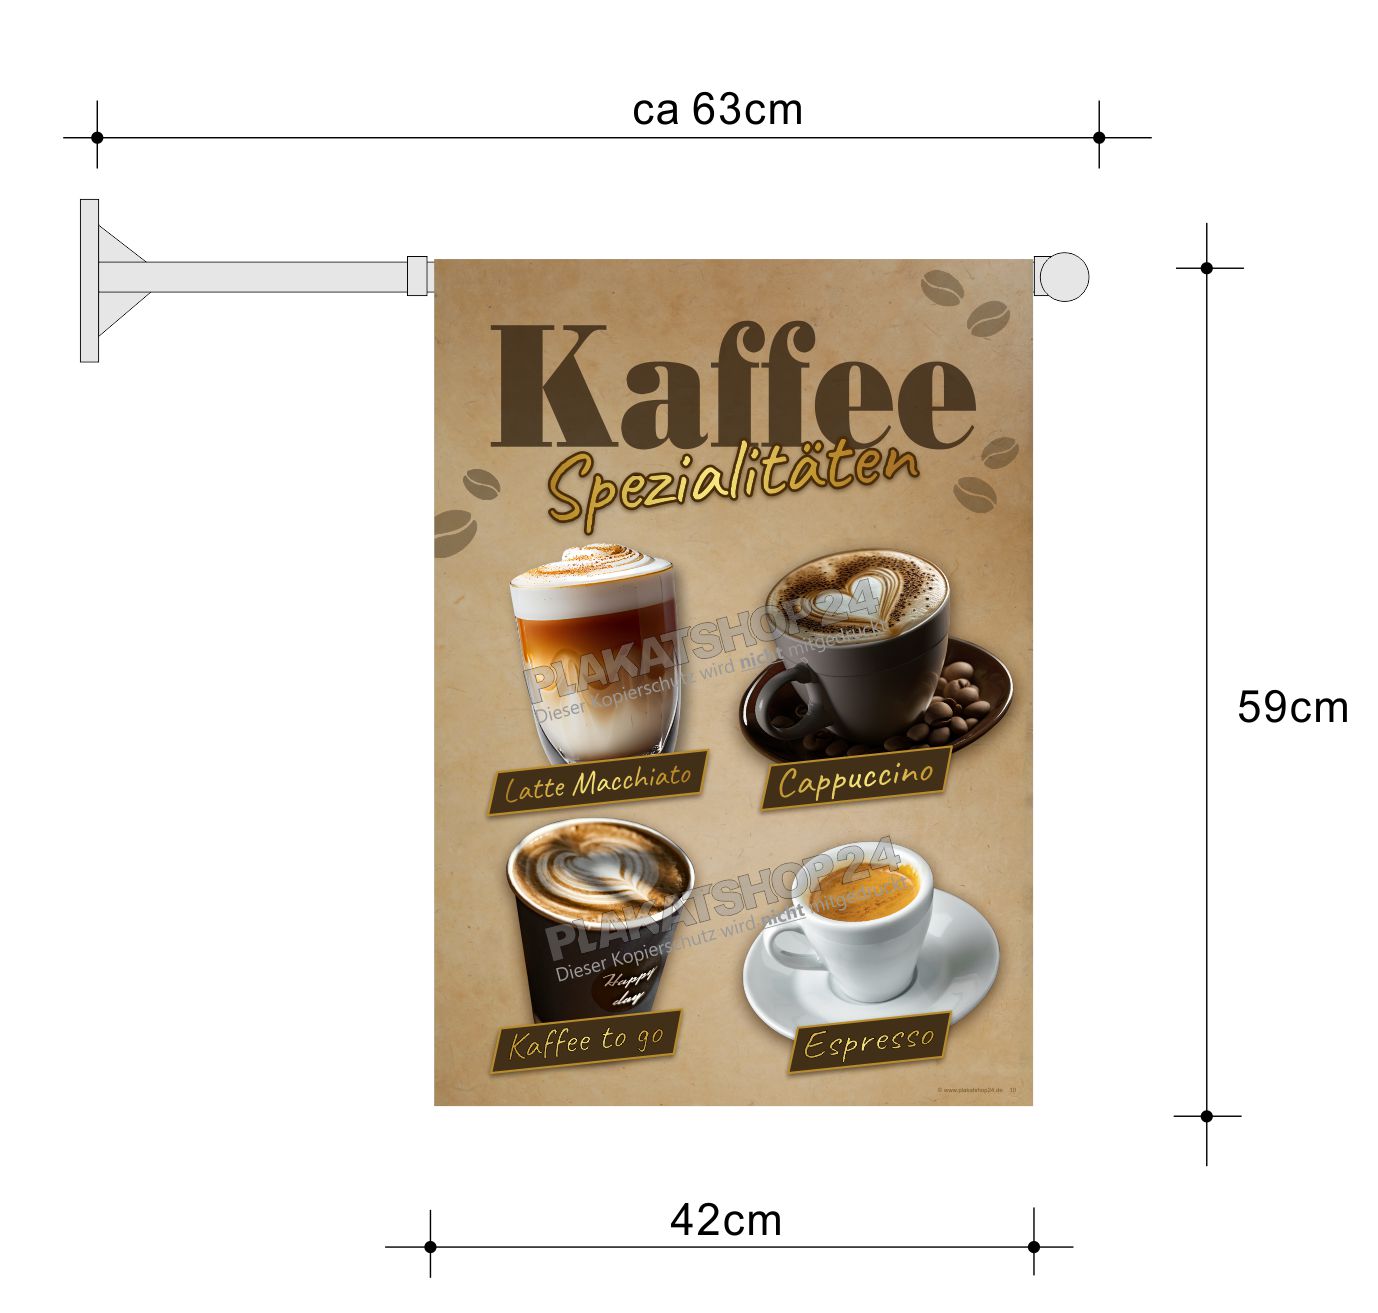 Stockfahne Kaffeespezialitäten mit Fotos von Cappuccino, Latte Macchiato, Kaffee to go, Espresso